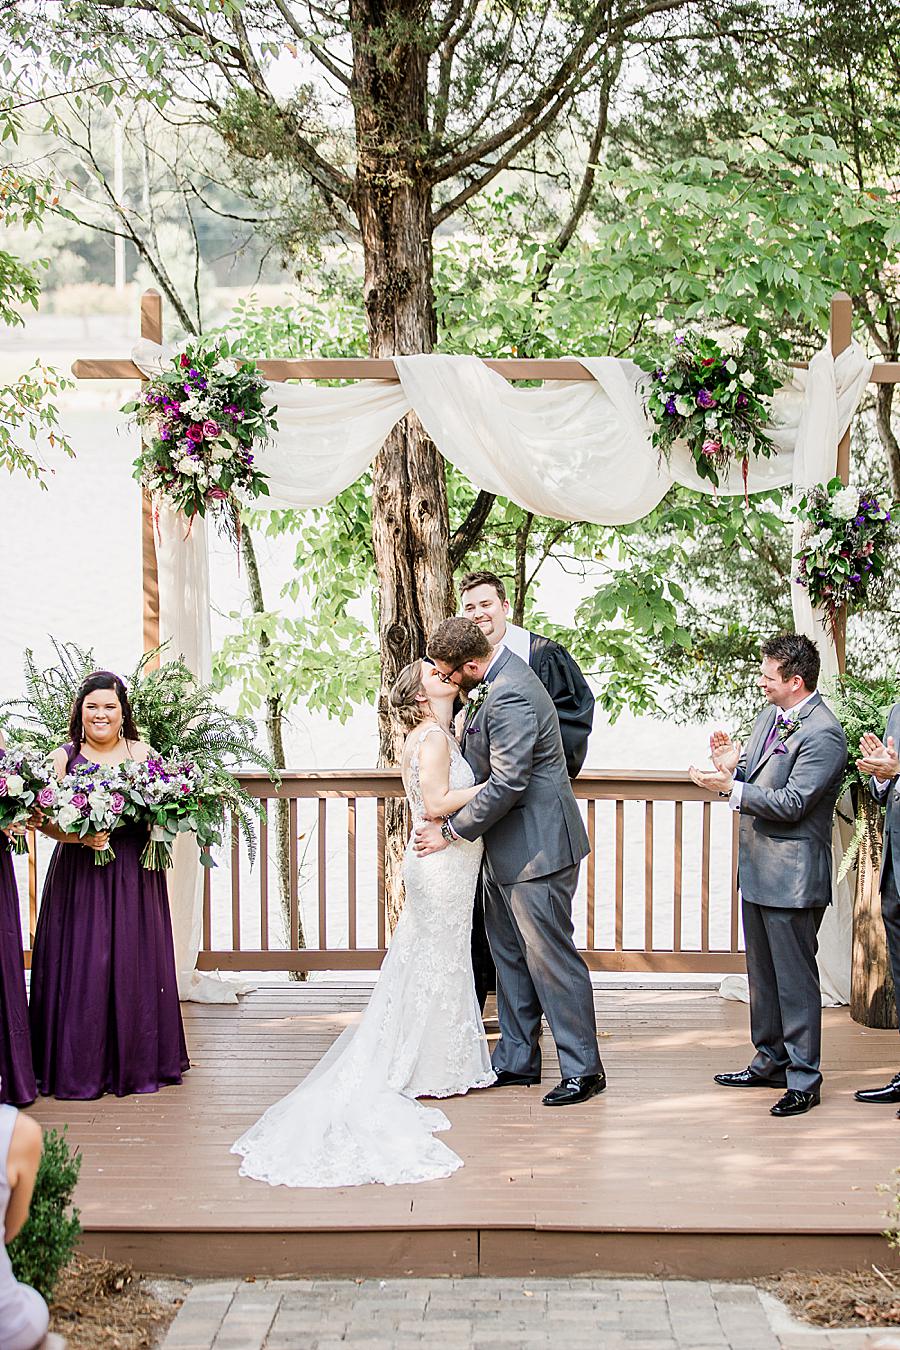 You may kiss the bride at this Hunter Valley Pavilion wedding by Knoxville Wedding Photographer, Amanda May Photos.